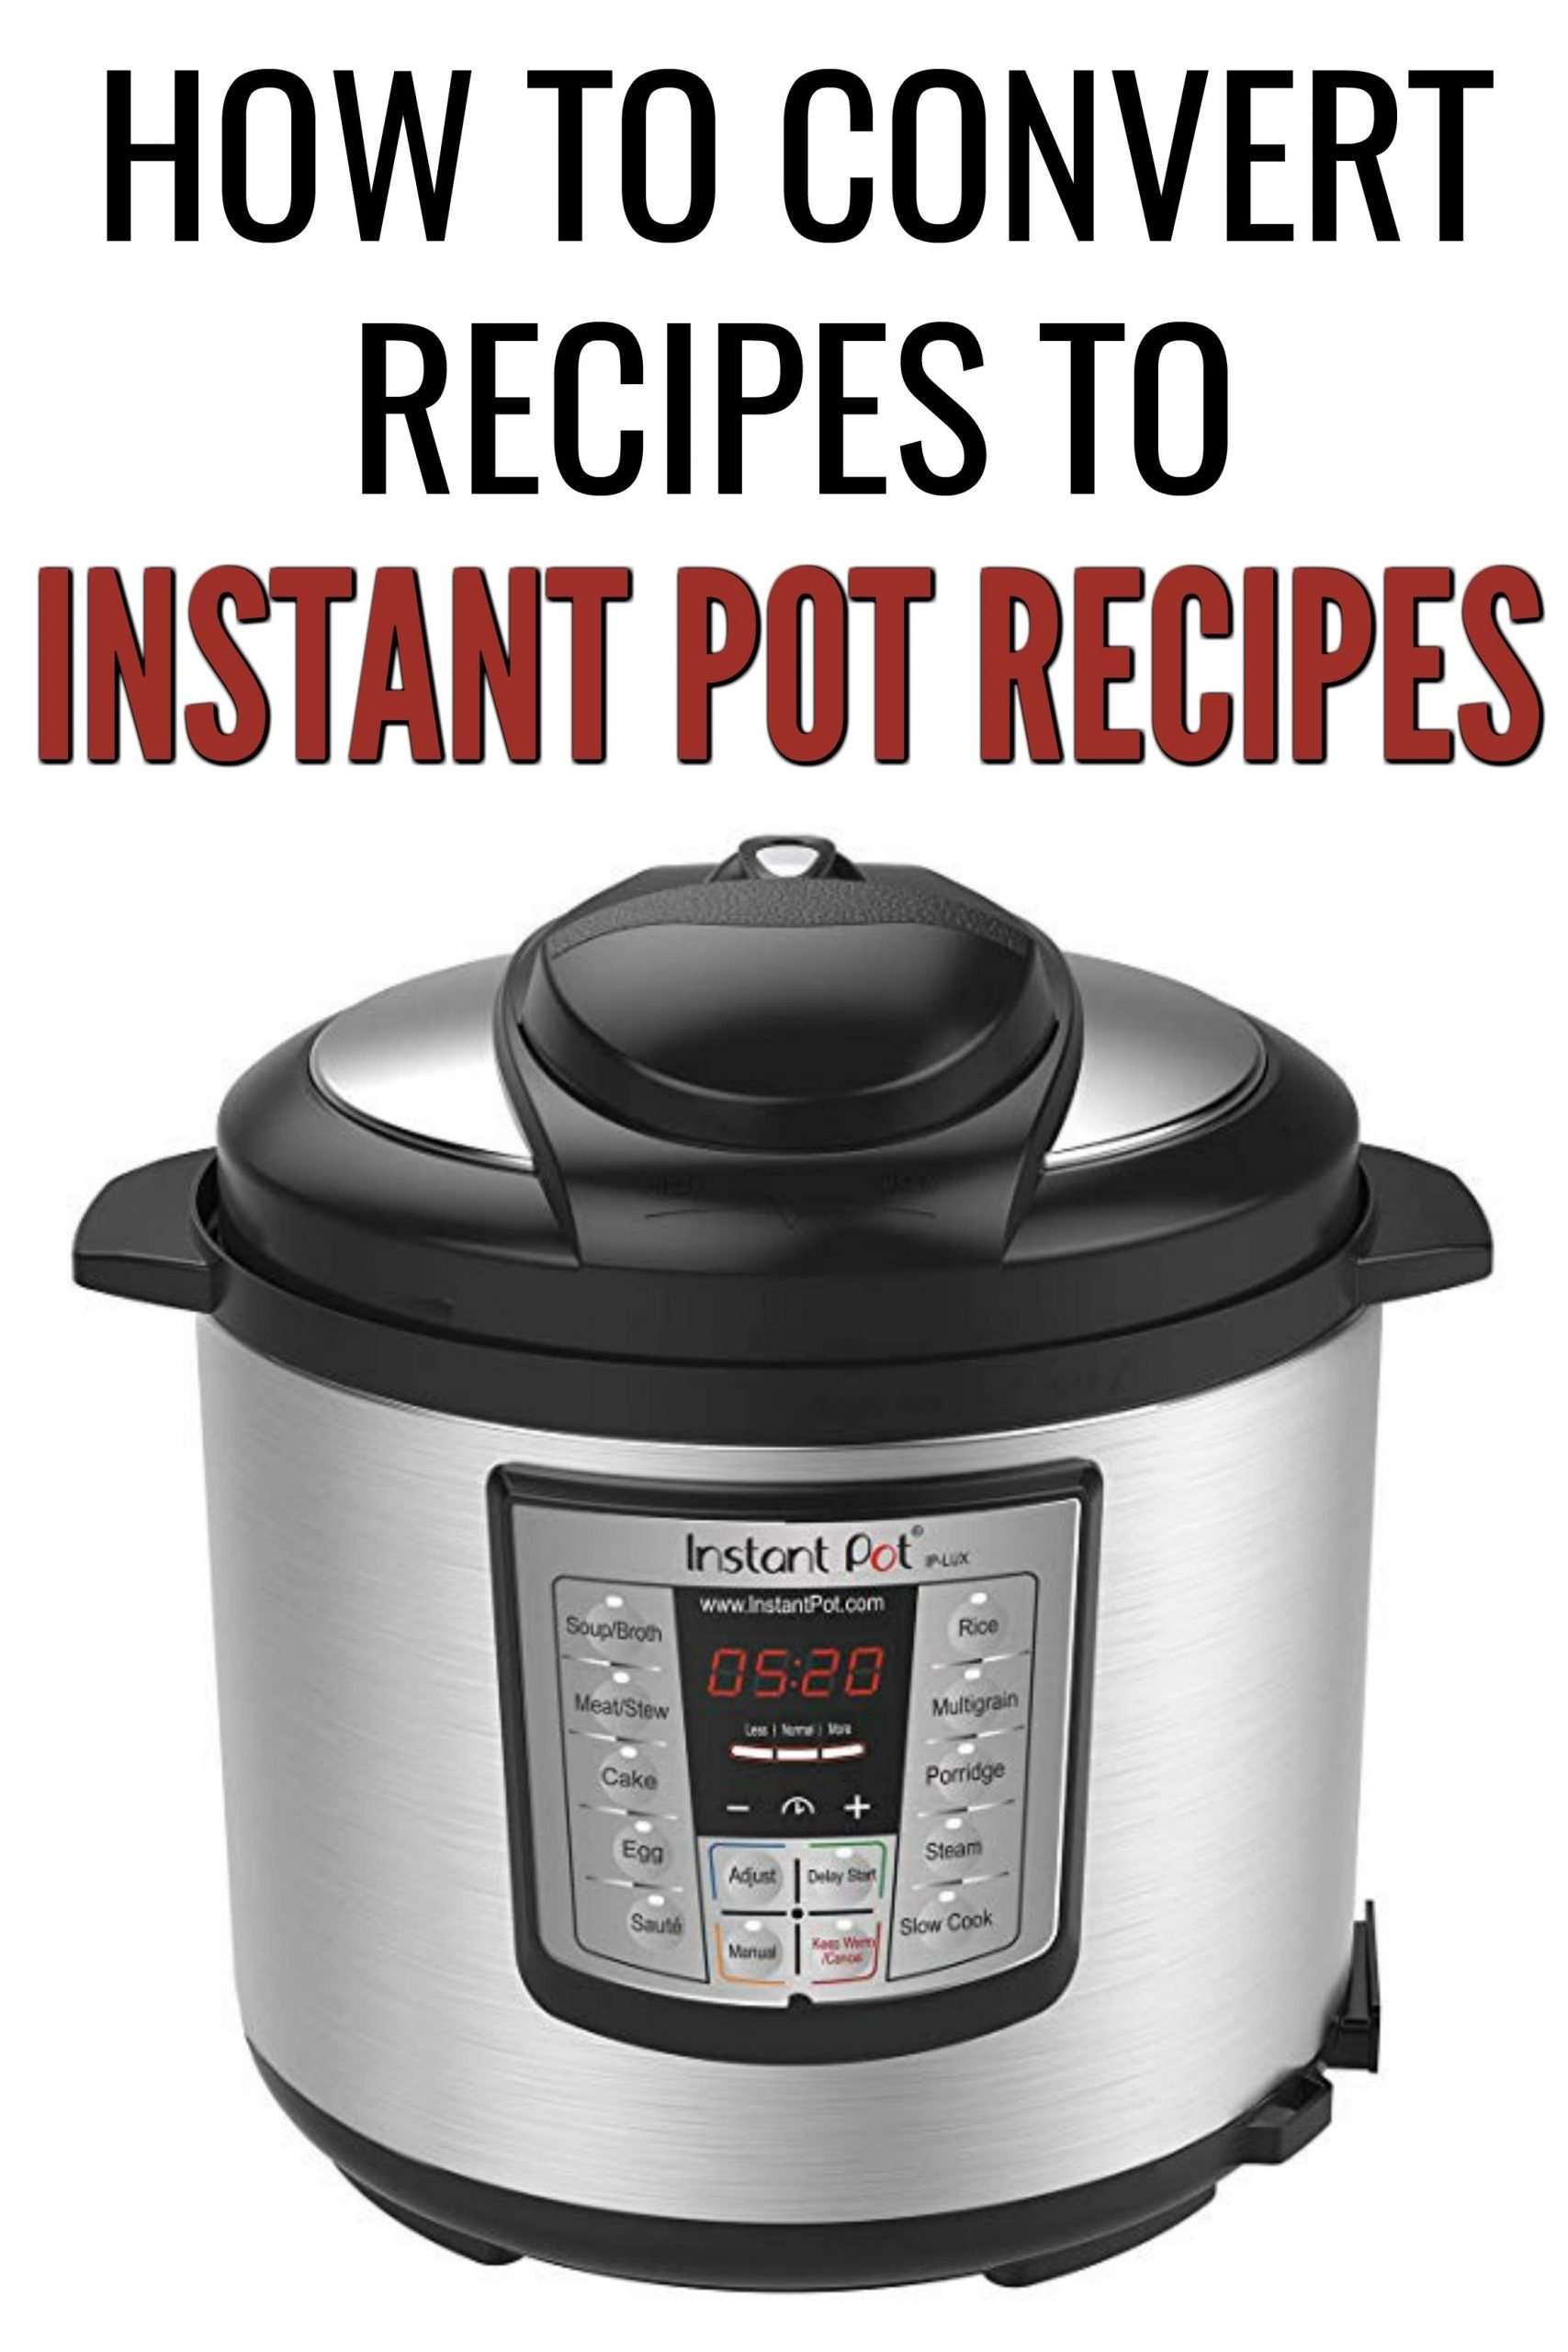 How To Convert Instant Pot Recipes - InstantPotClub.com